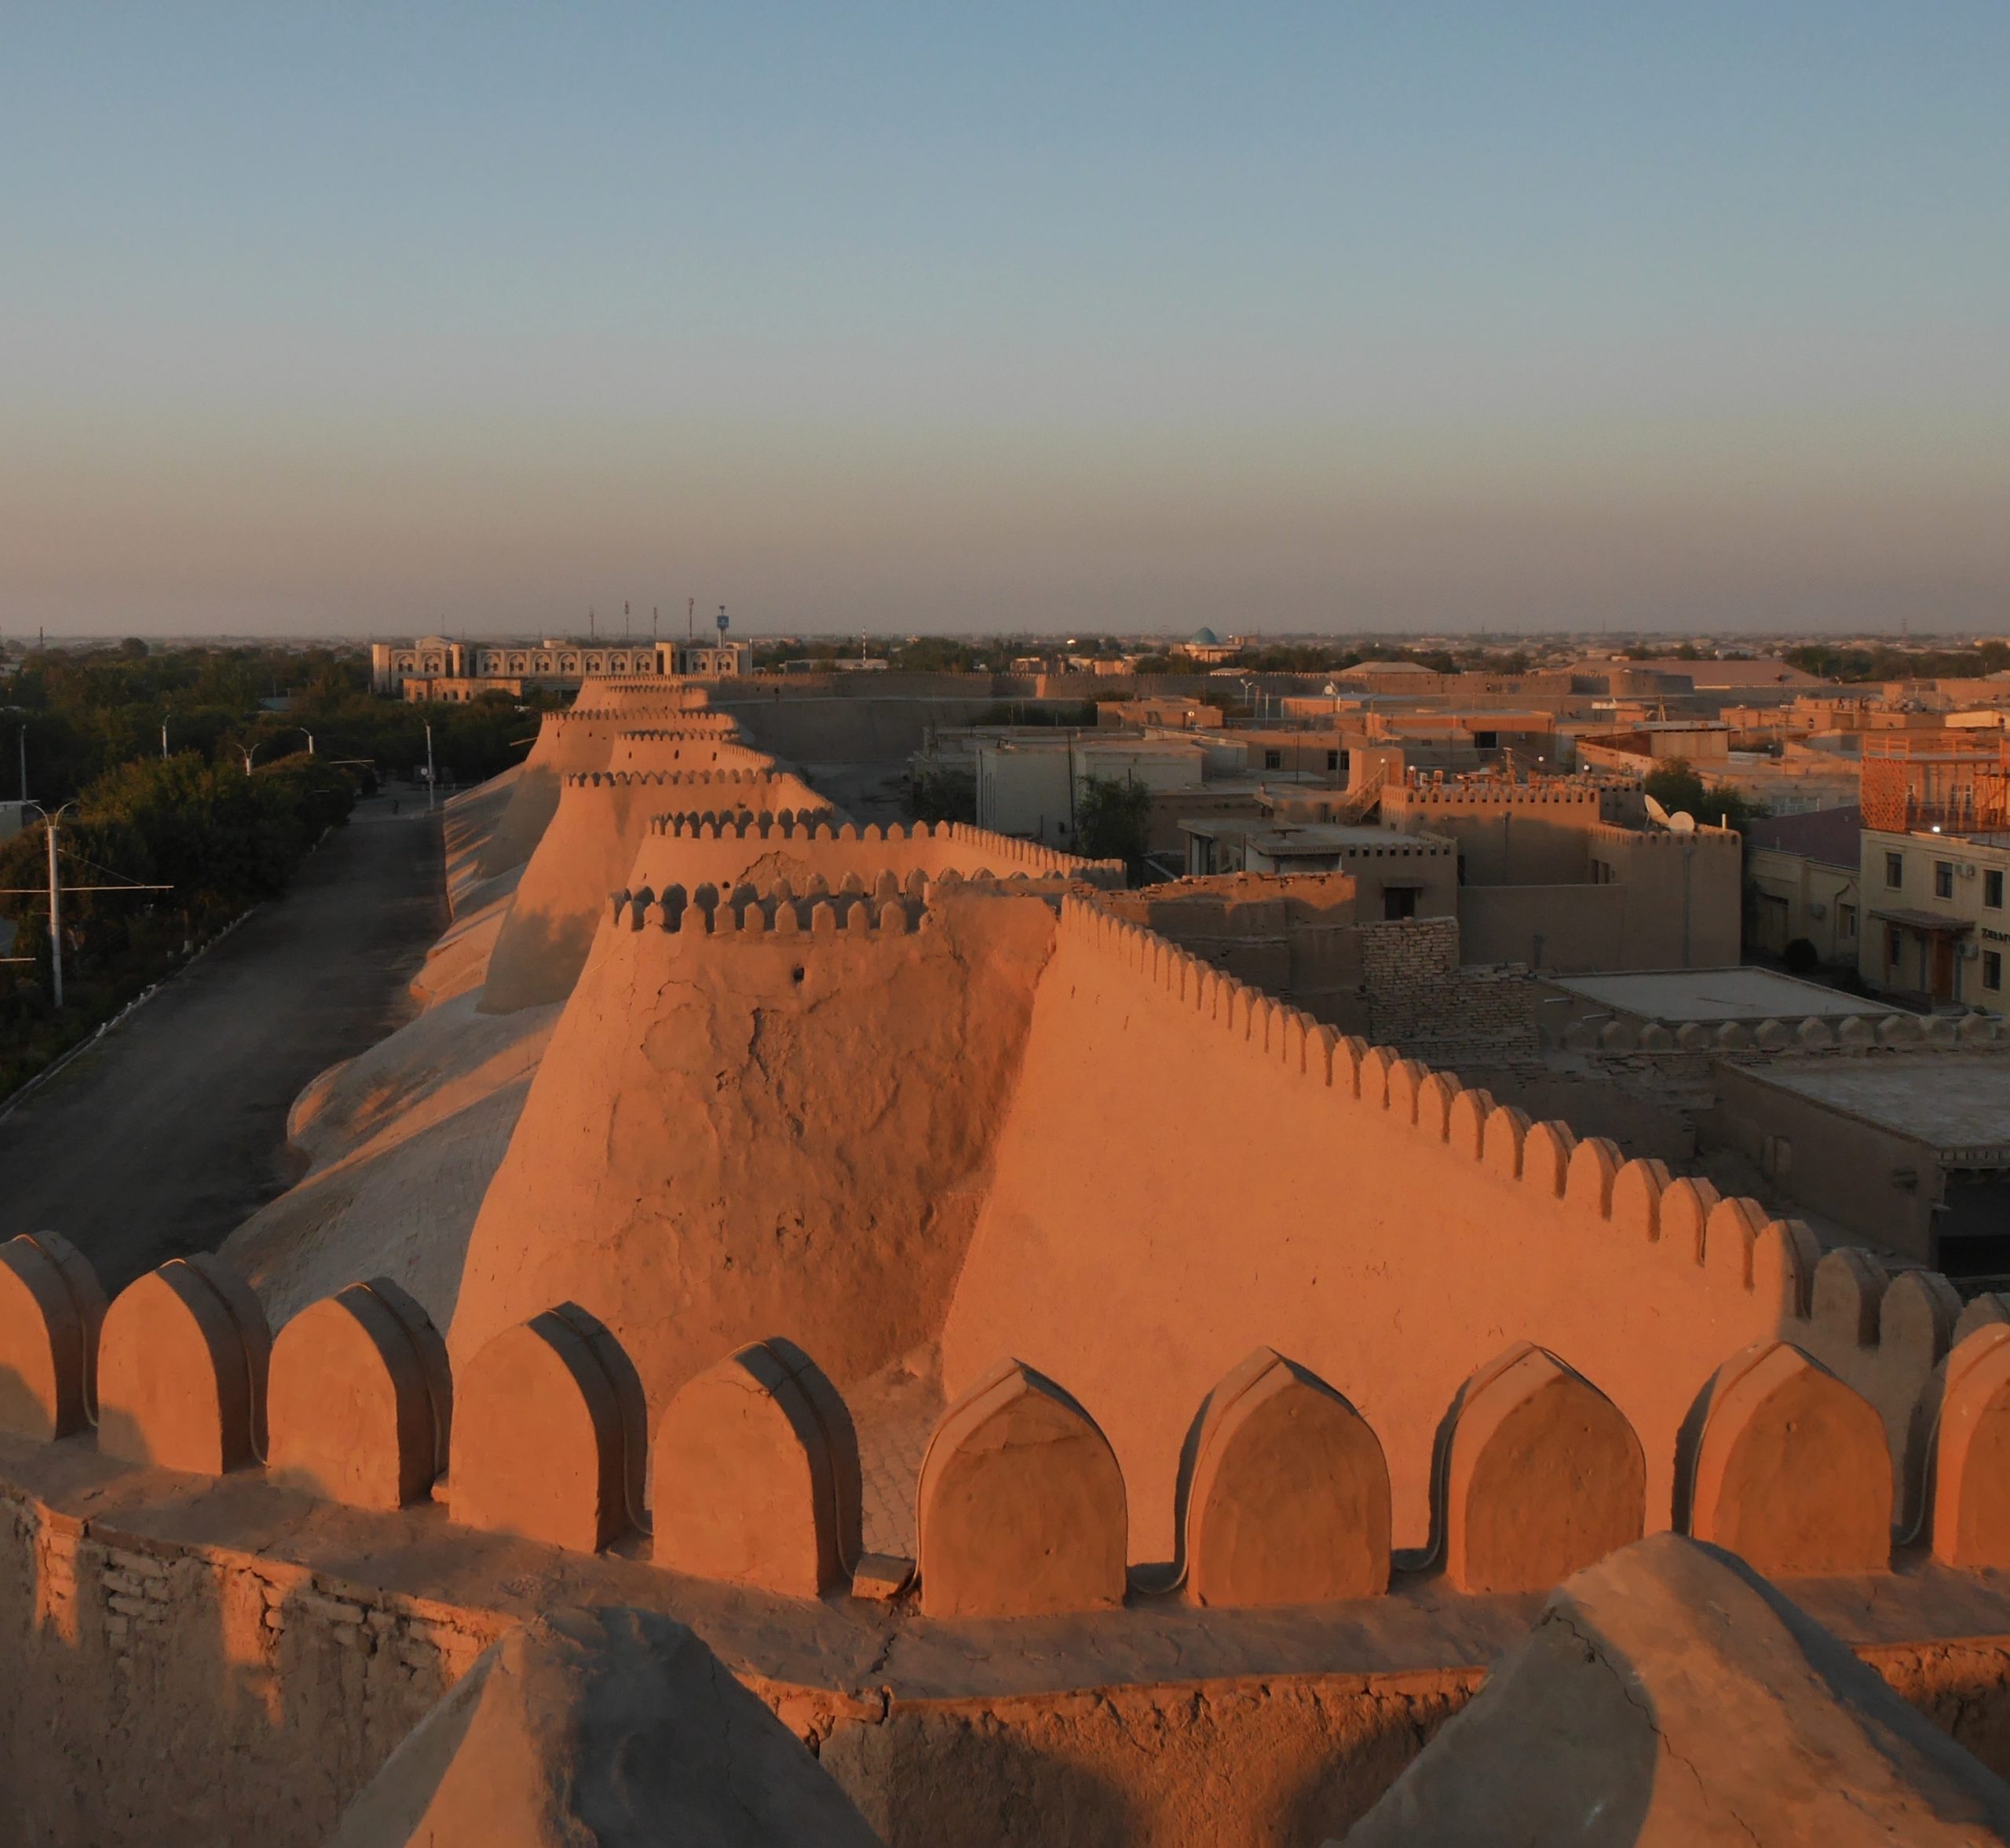 Walls of Khiva at sunset, Uzbekistan